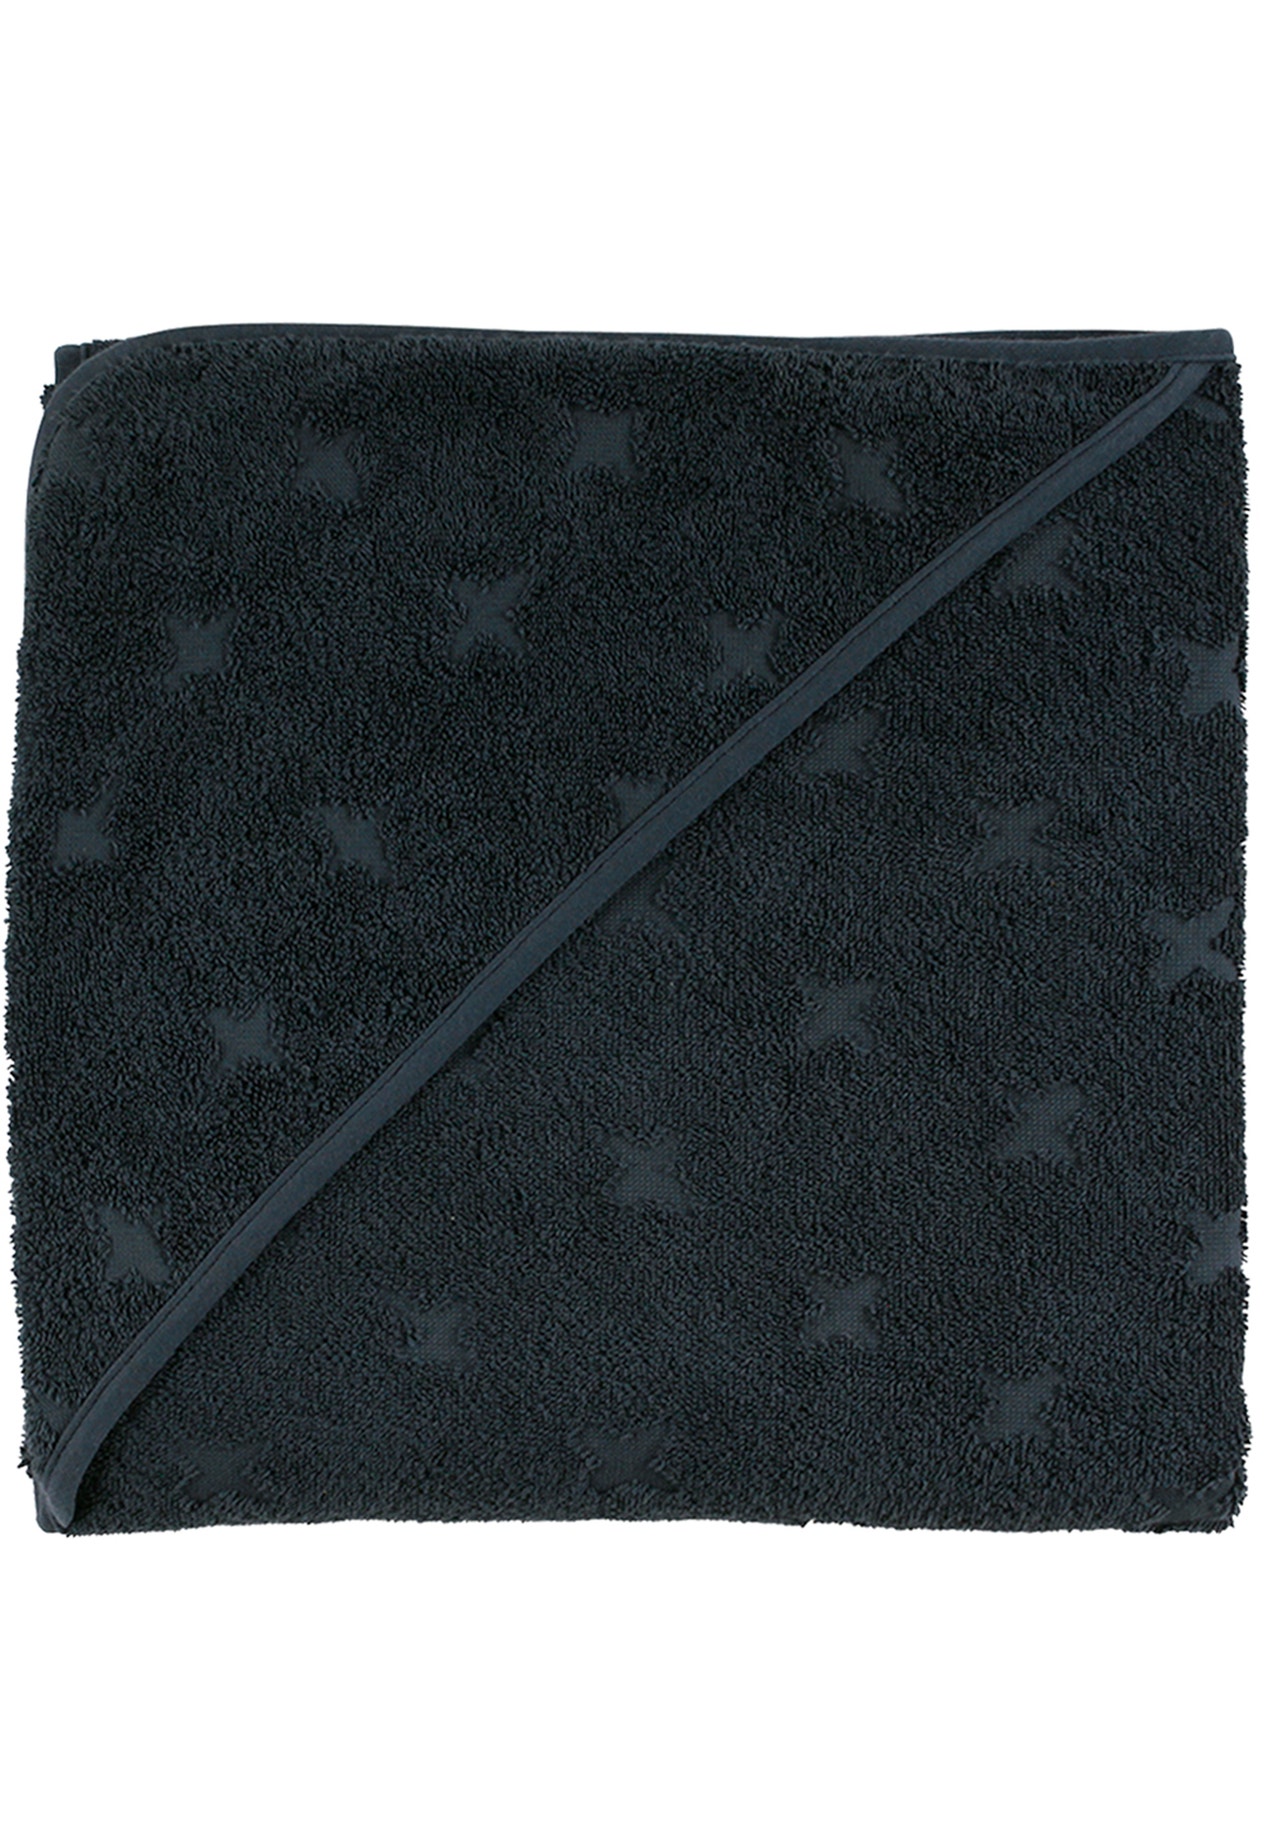 MAMA.LICIOUS müsli swaddle towel -Midnight - 1569002701